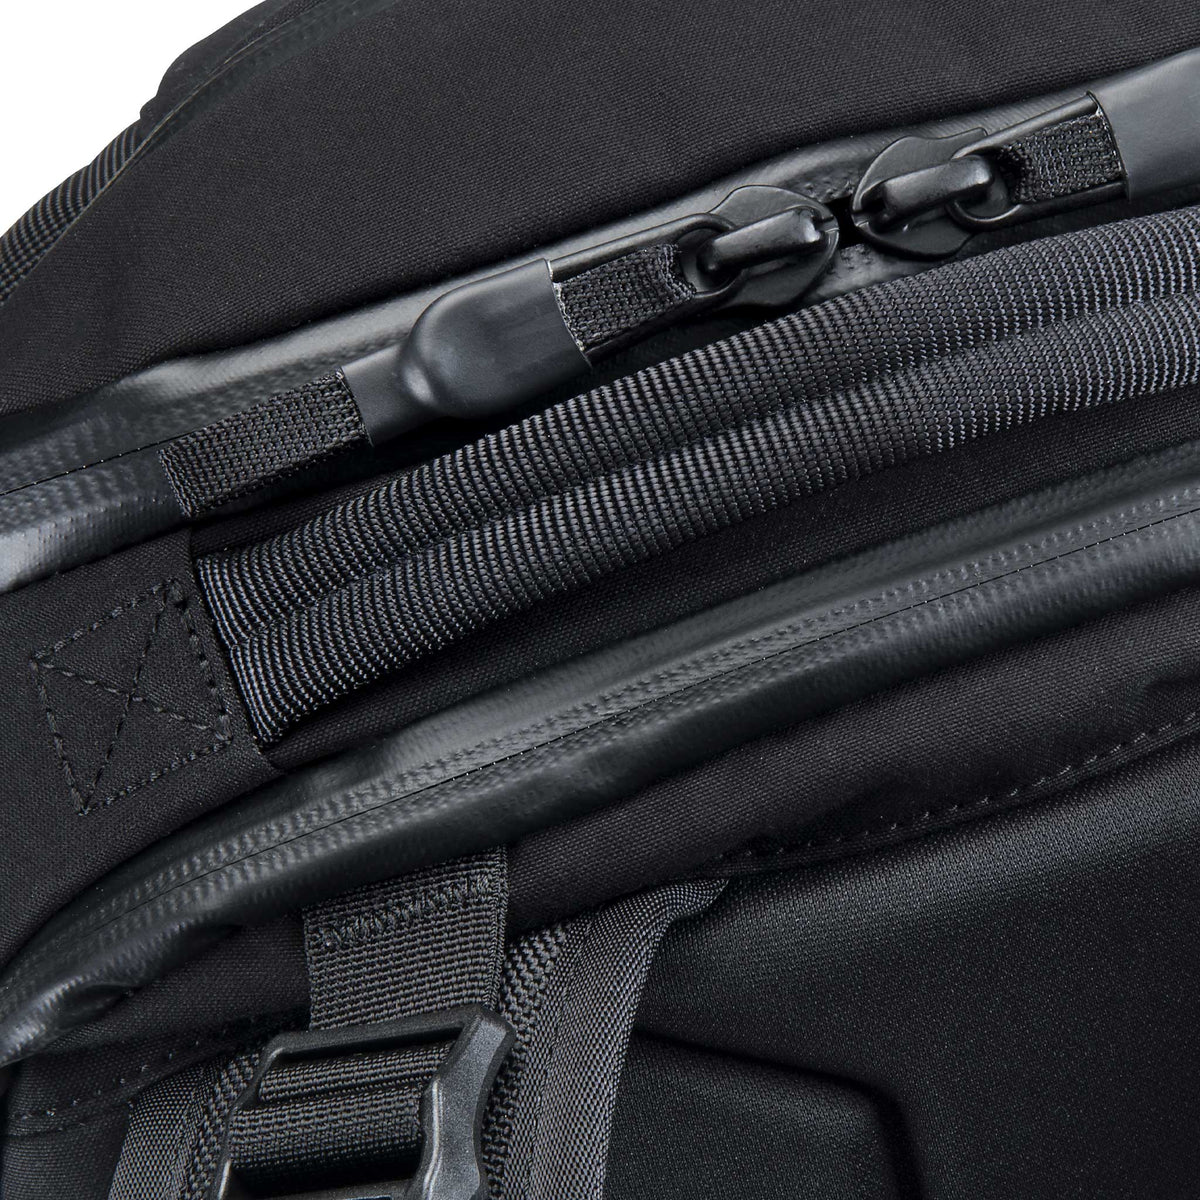 Pelican™ MPB35 Backpack detail shot of zippers